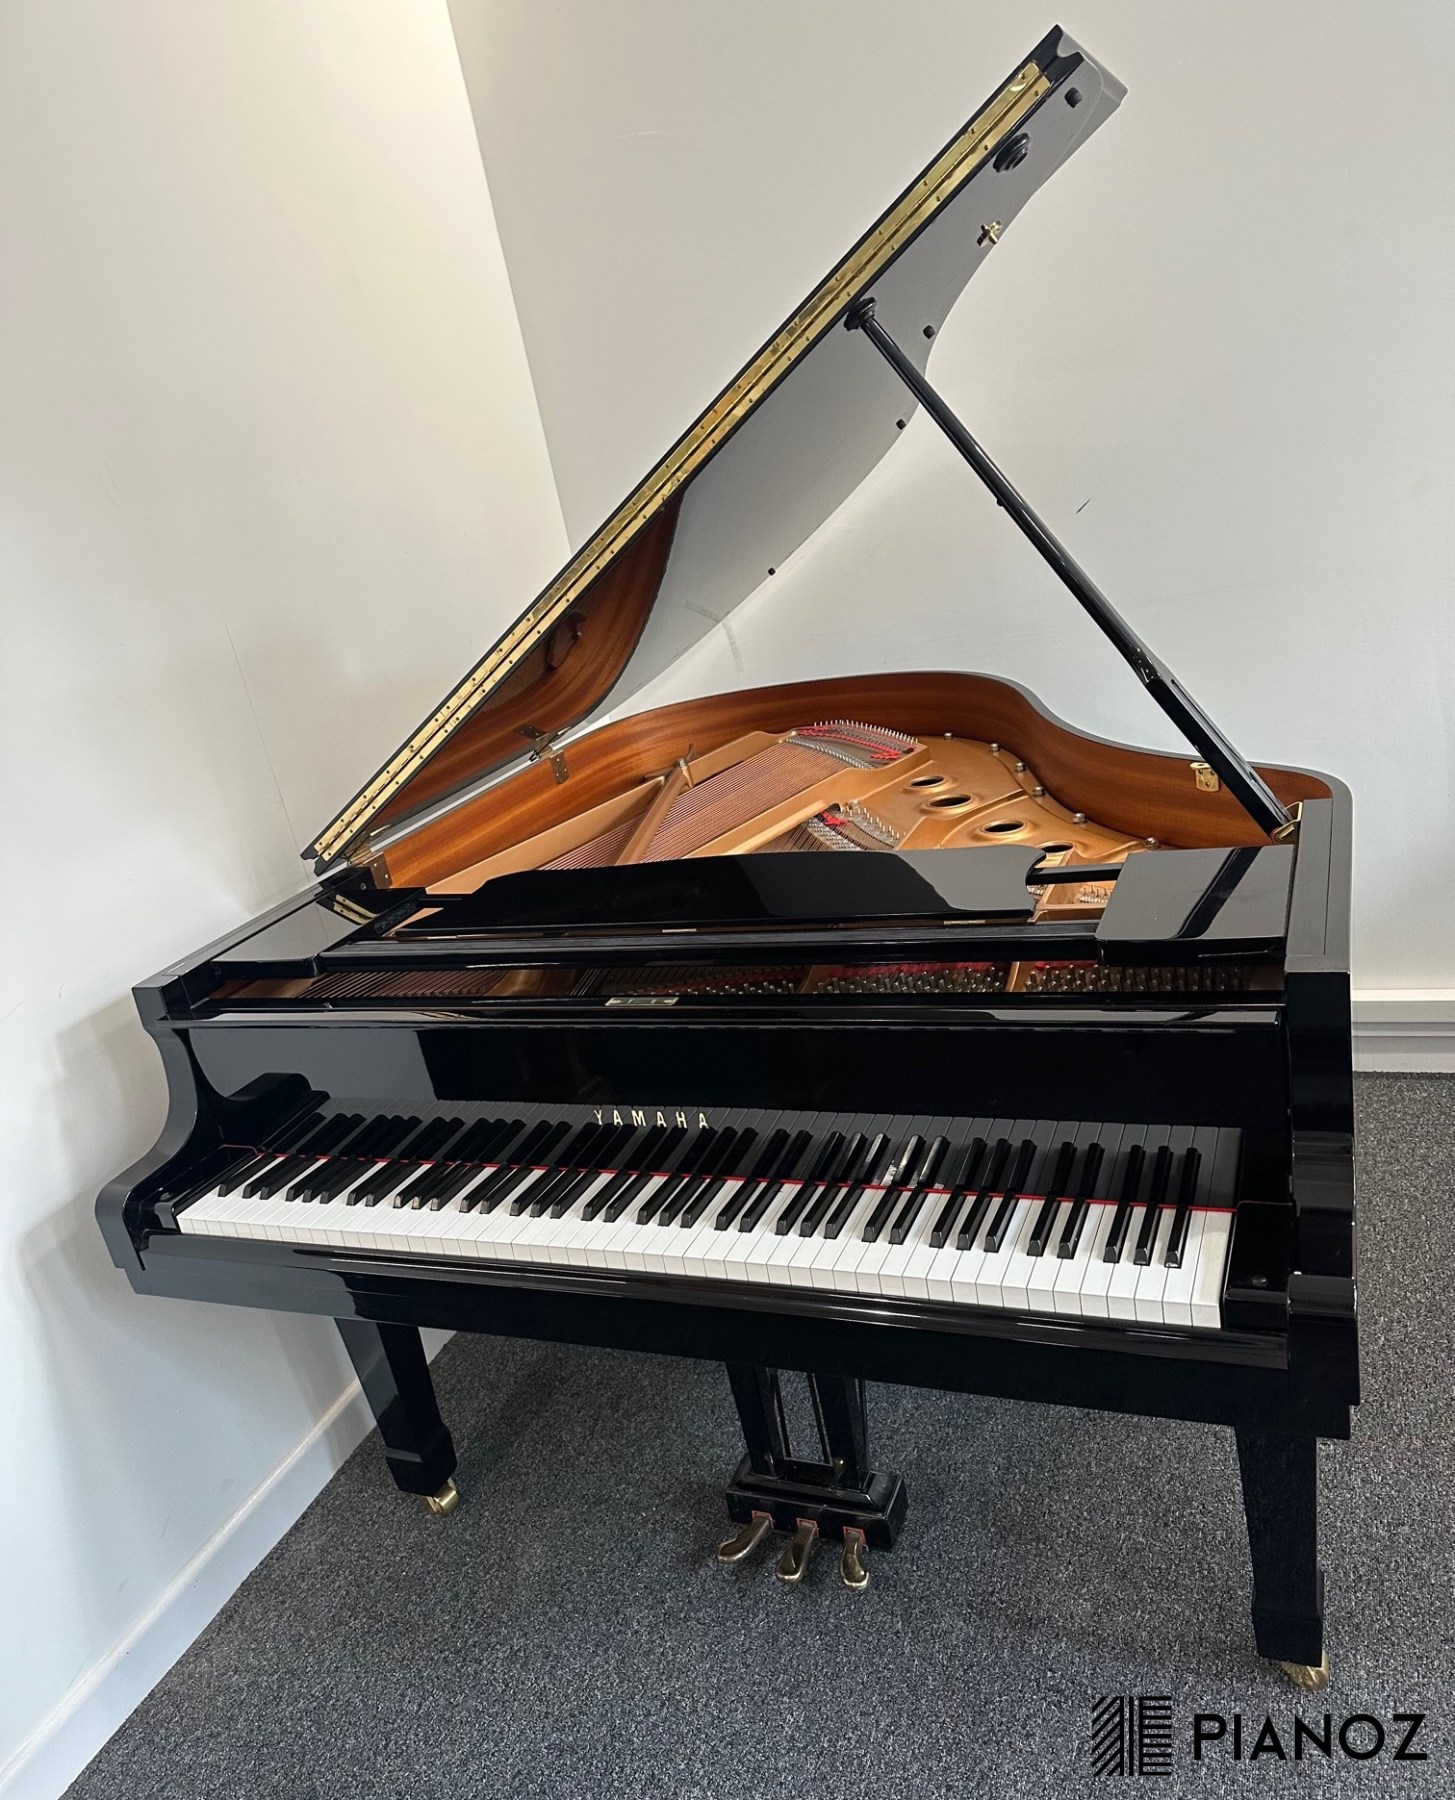 Yamaha C2 Baby Grand Piano piano for sale in UK